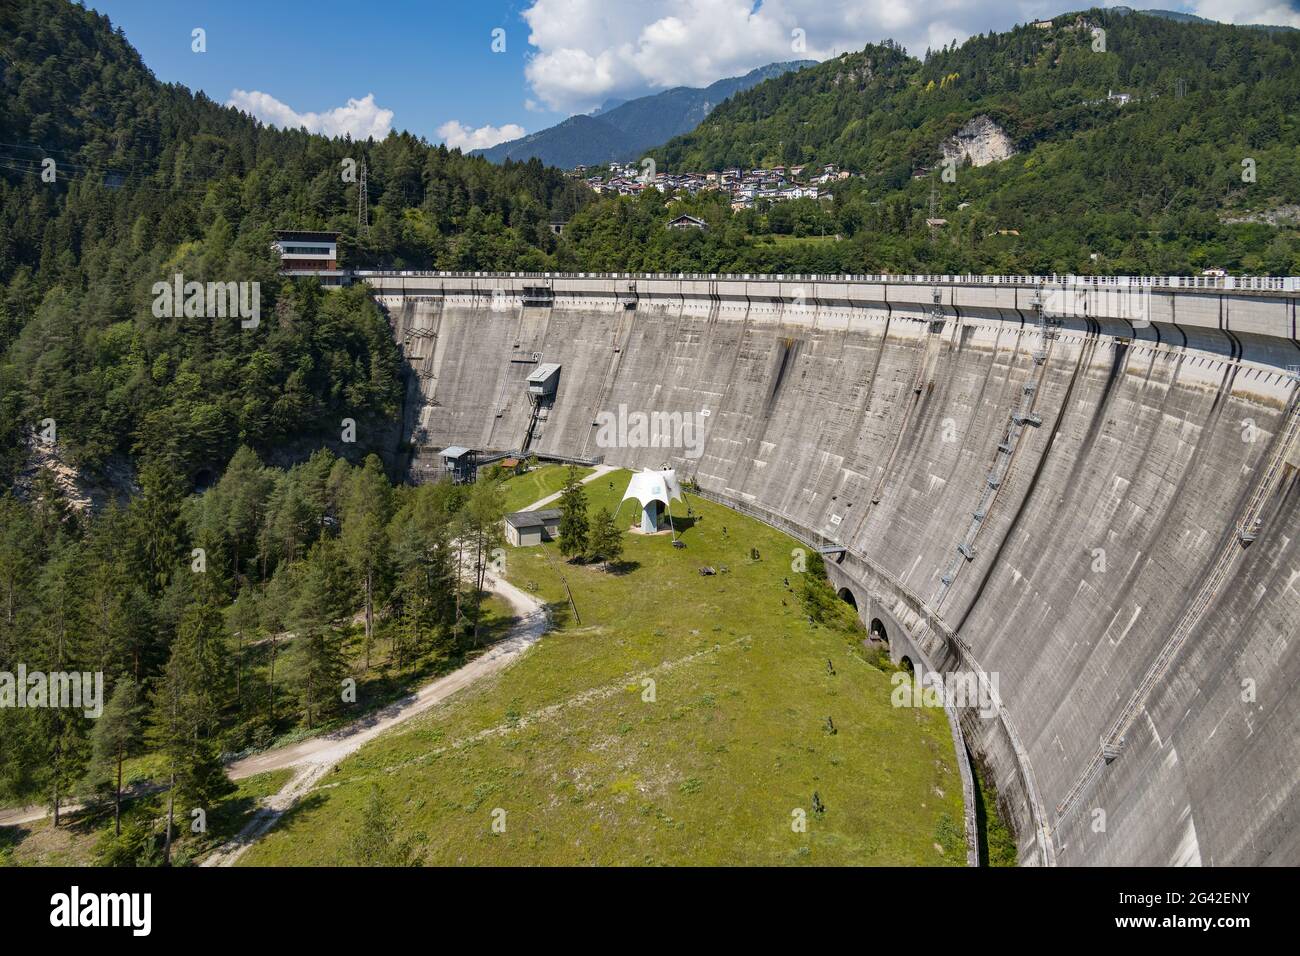 PIEVE DI CADORE, VENETIEN/ITALIEN - AUGUST 10 : Blick auf den Damm von Pieve di Cadore, Venetien, Italien am 10. August 2020 Stockfoto